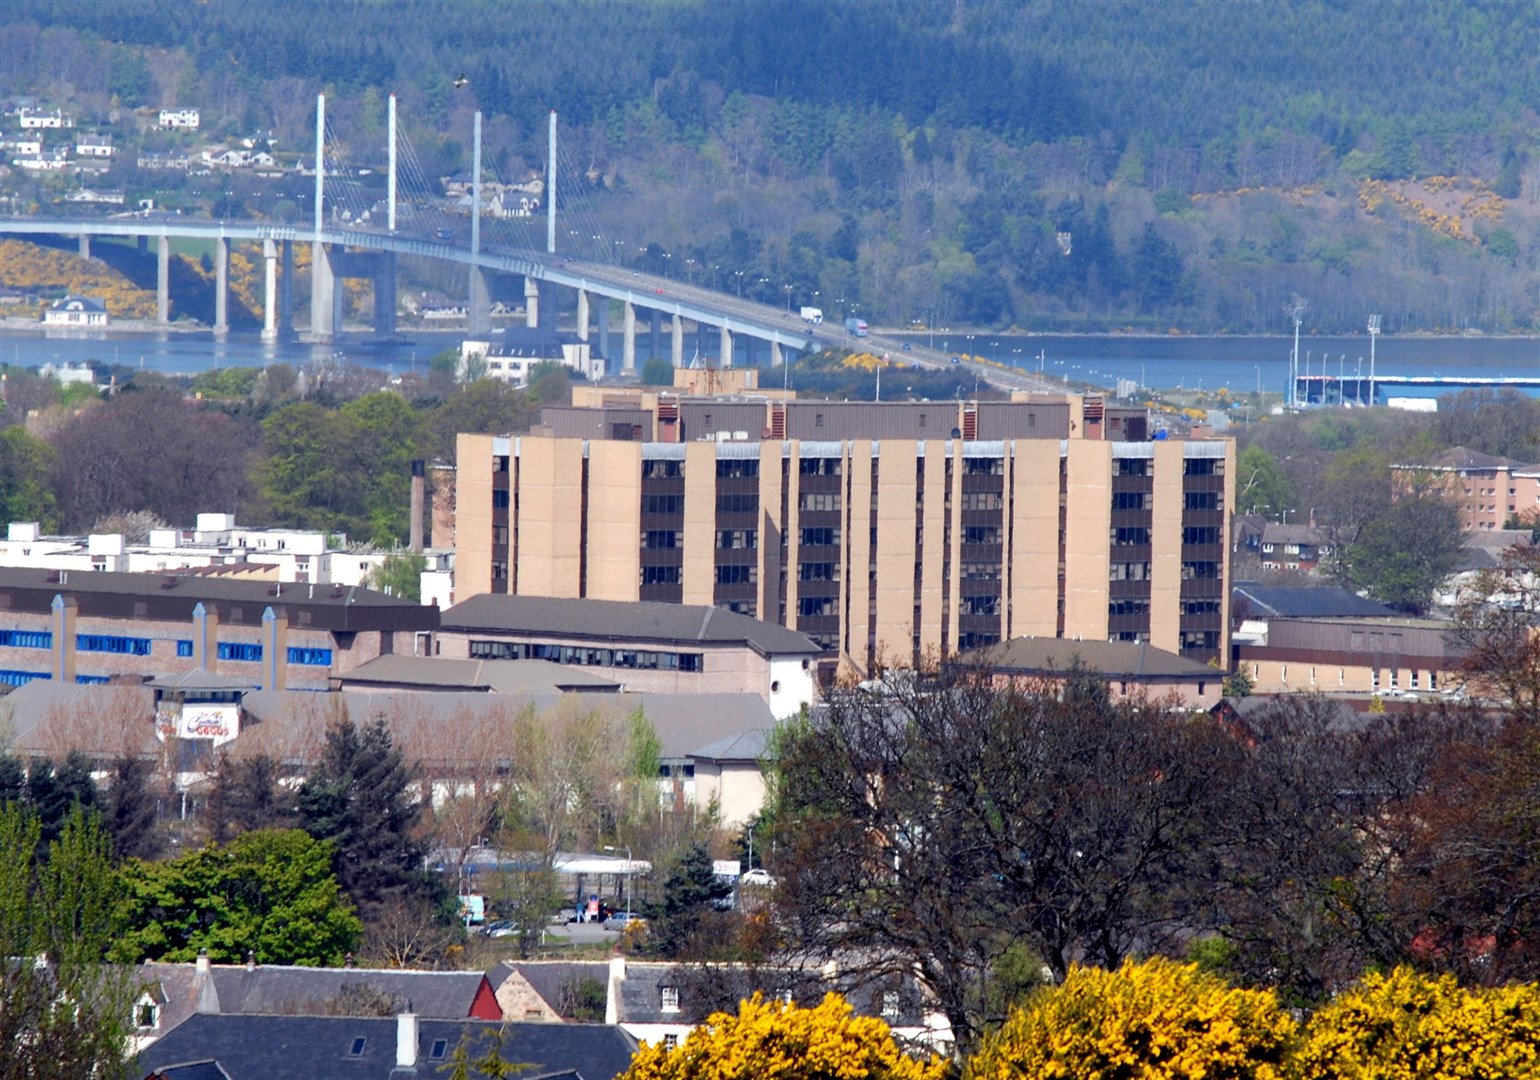 Raigmore Hospital, Inverness.